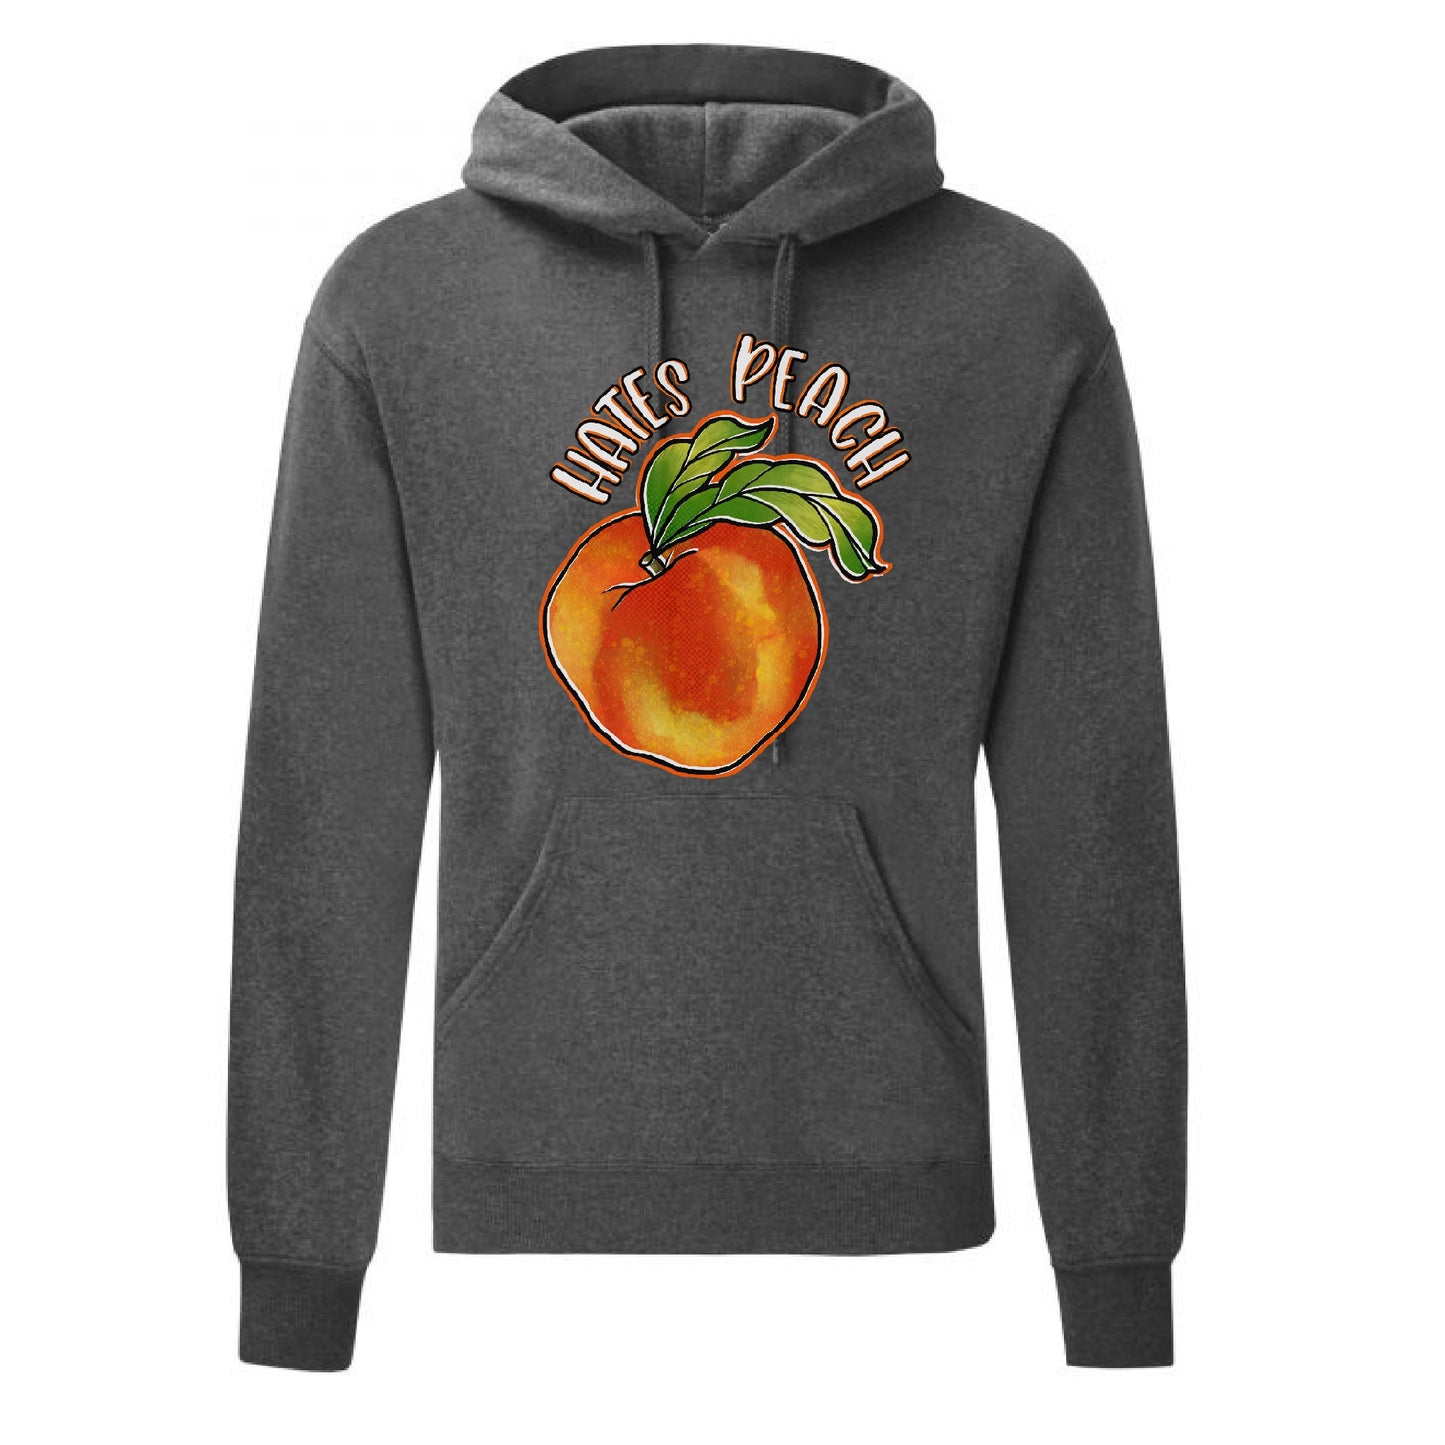 Hates Peach Hoodie